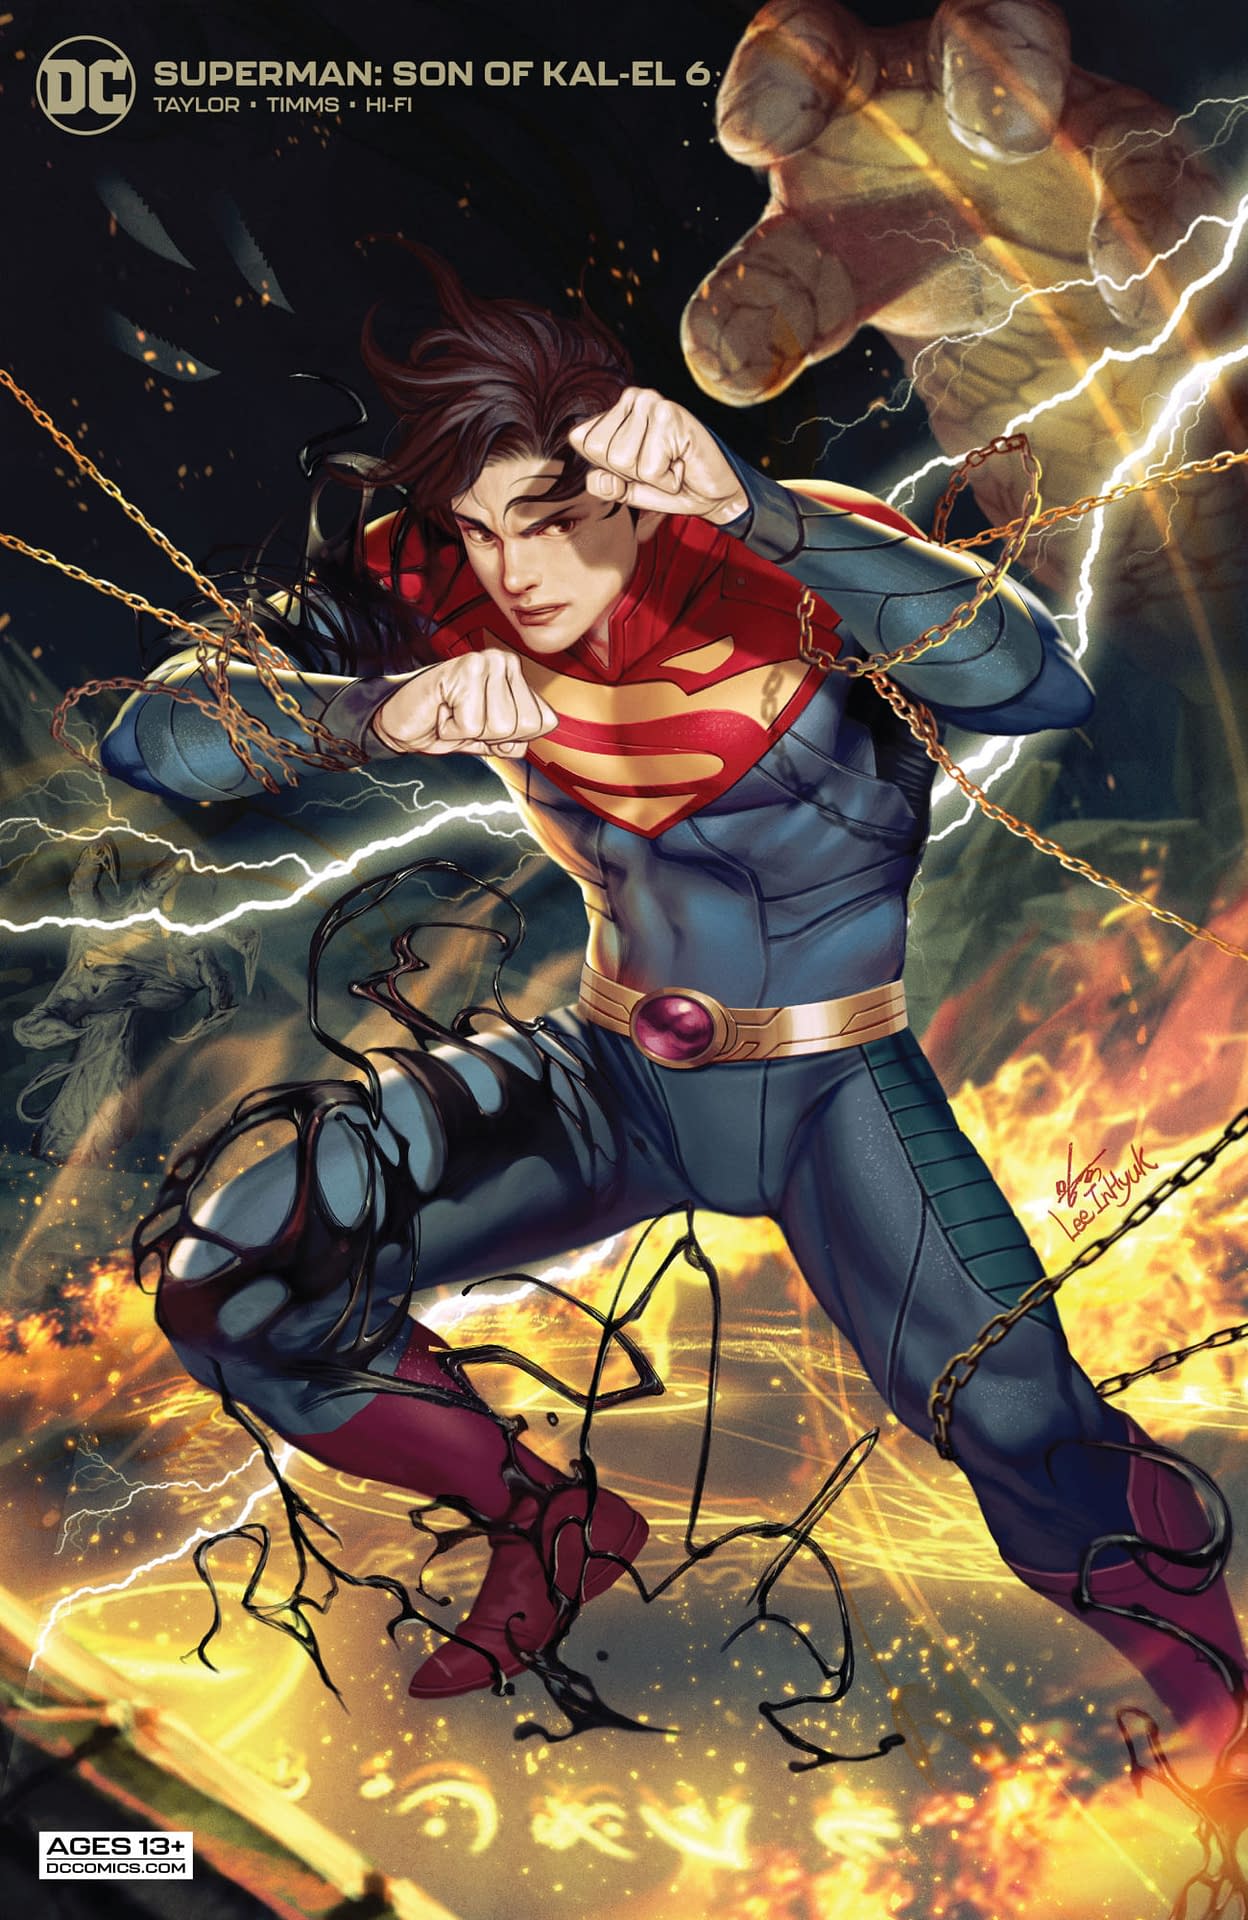 Superman: Son of Kal-El #6 Review | The Aspiring Kryptonian